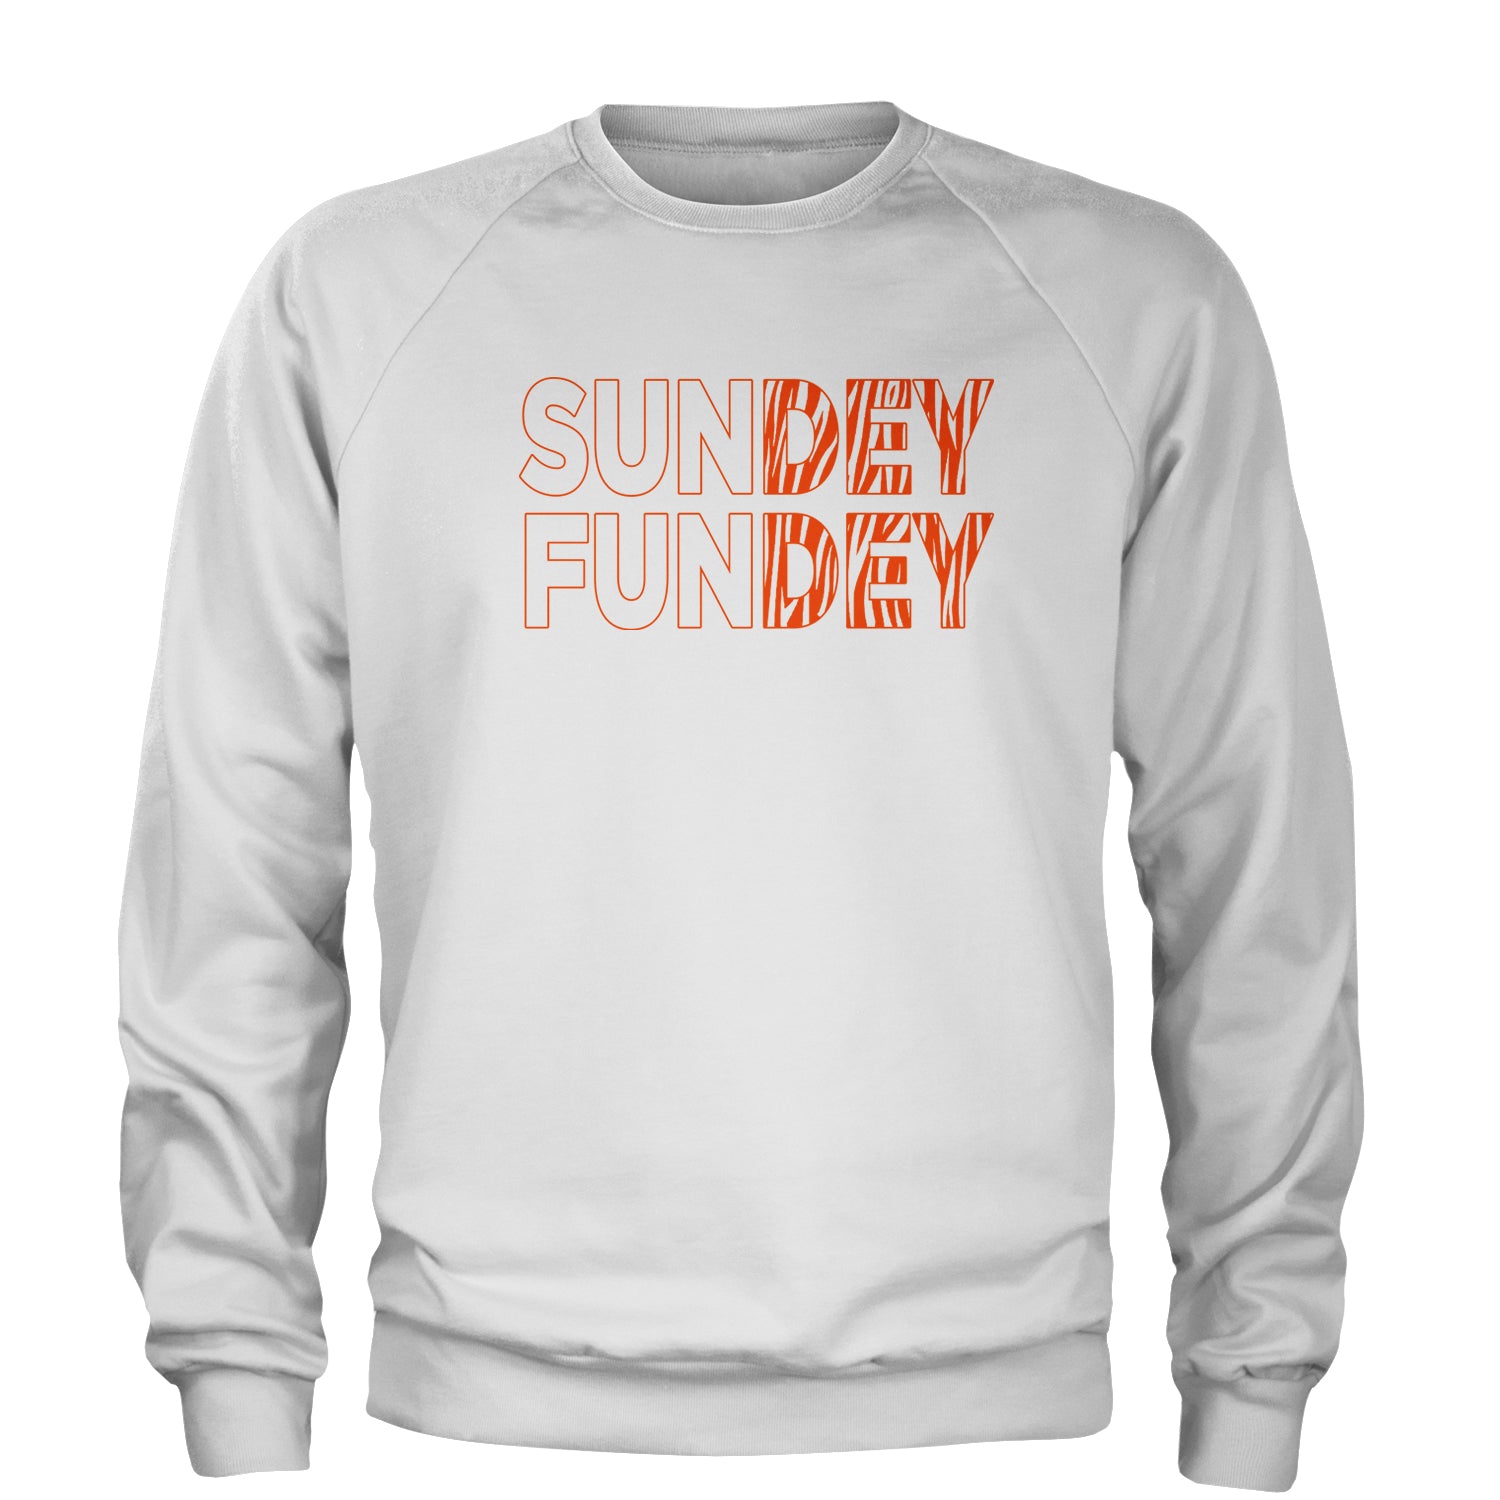 SunDEY FunDEY Sunday Funday Adult Crewneck Sweatshirt ball, burrow, dey, foot, football, joe, ohio, sports, who by Expression Tees